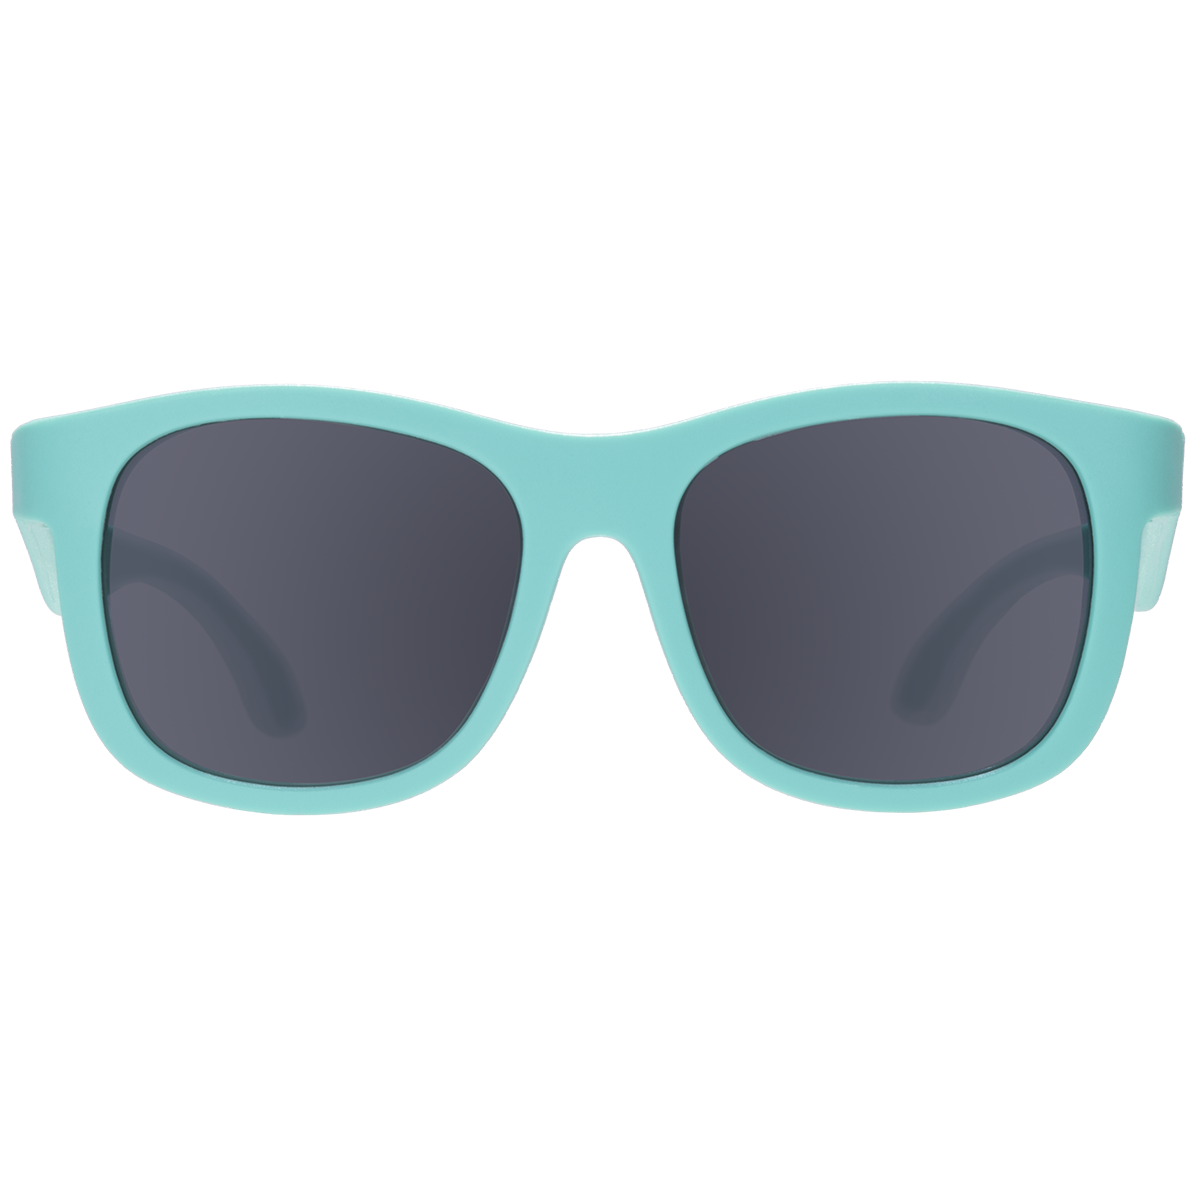 Totally Turquoise Navigator Babiators Sunglasses